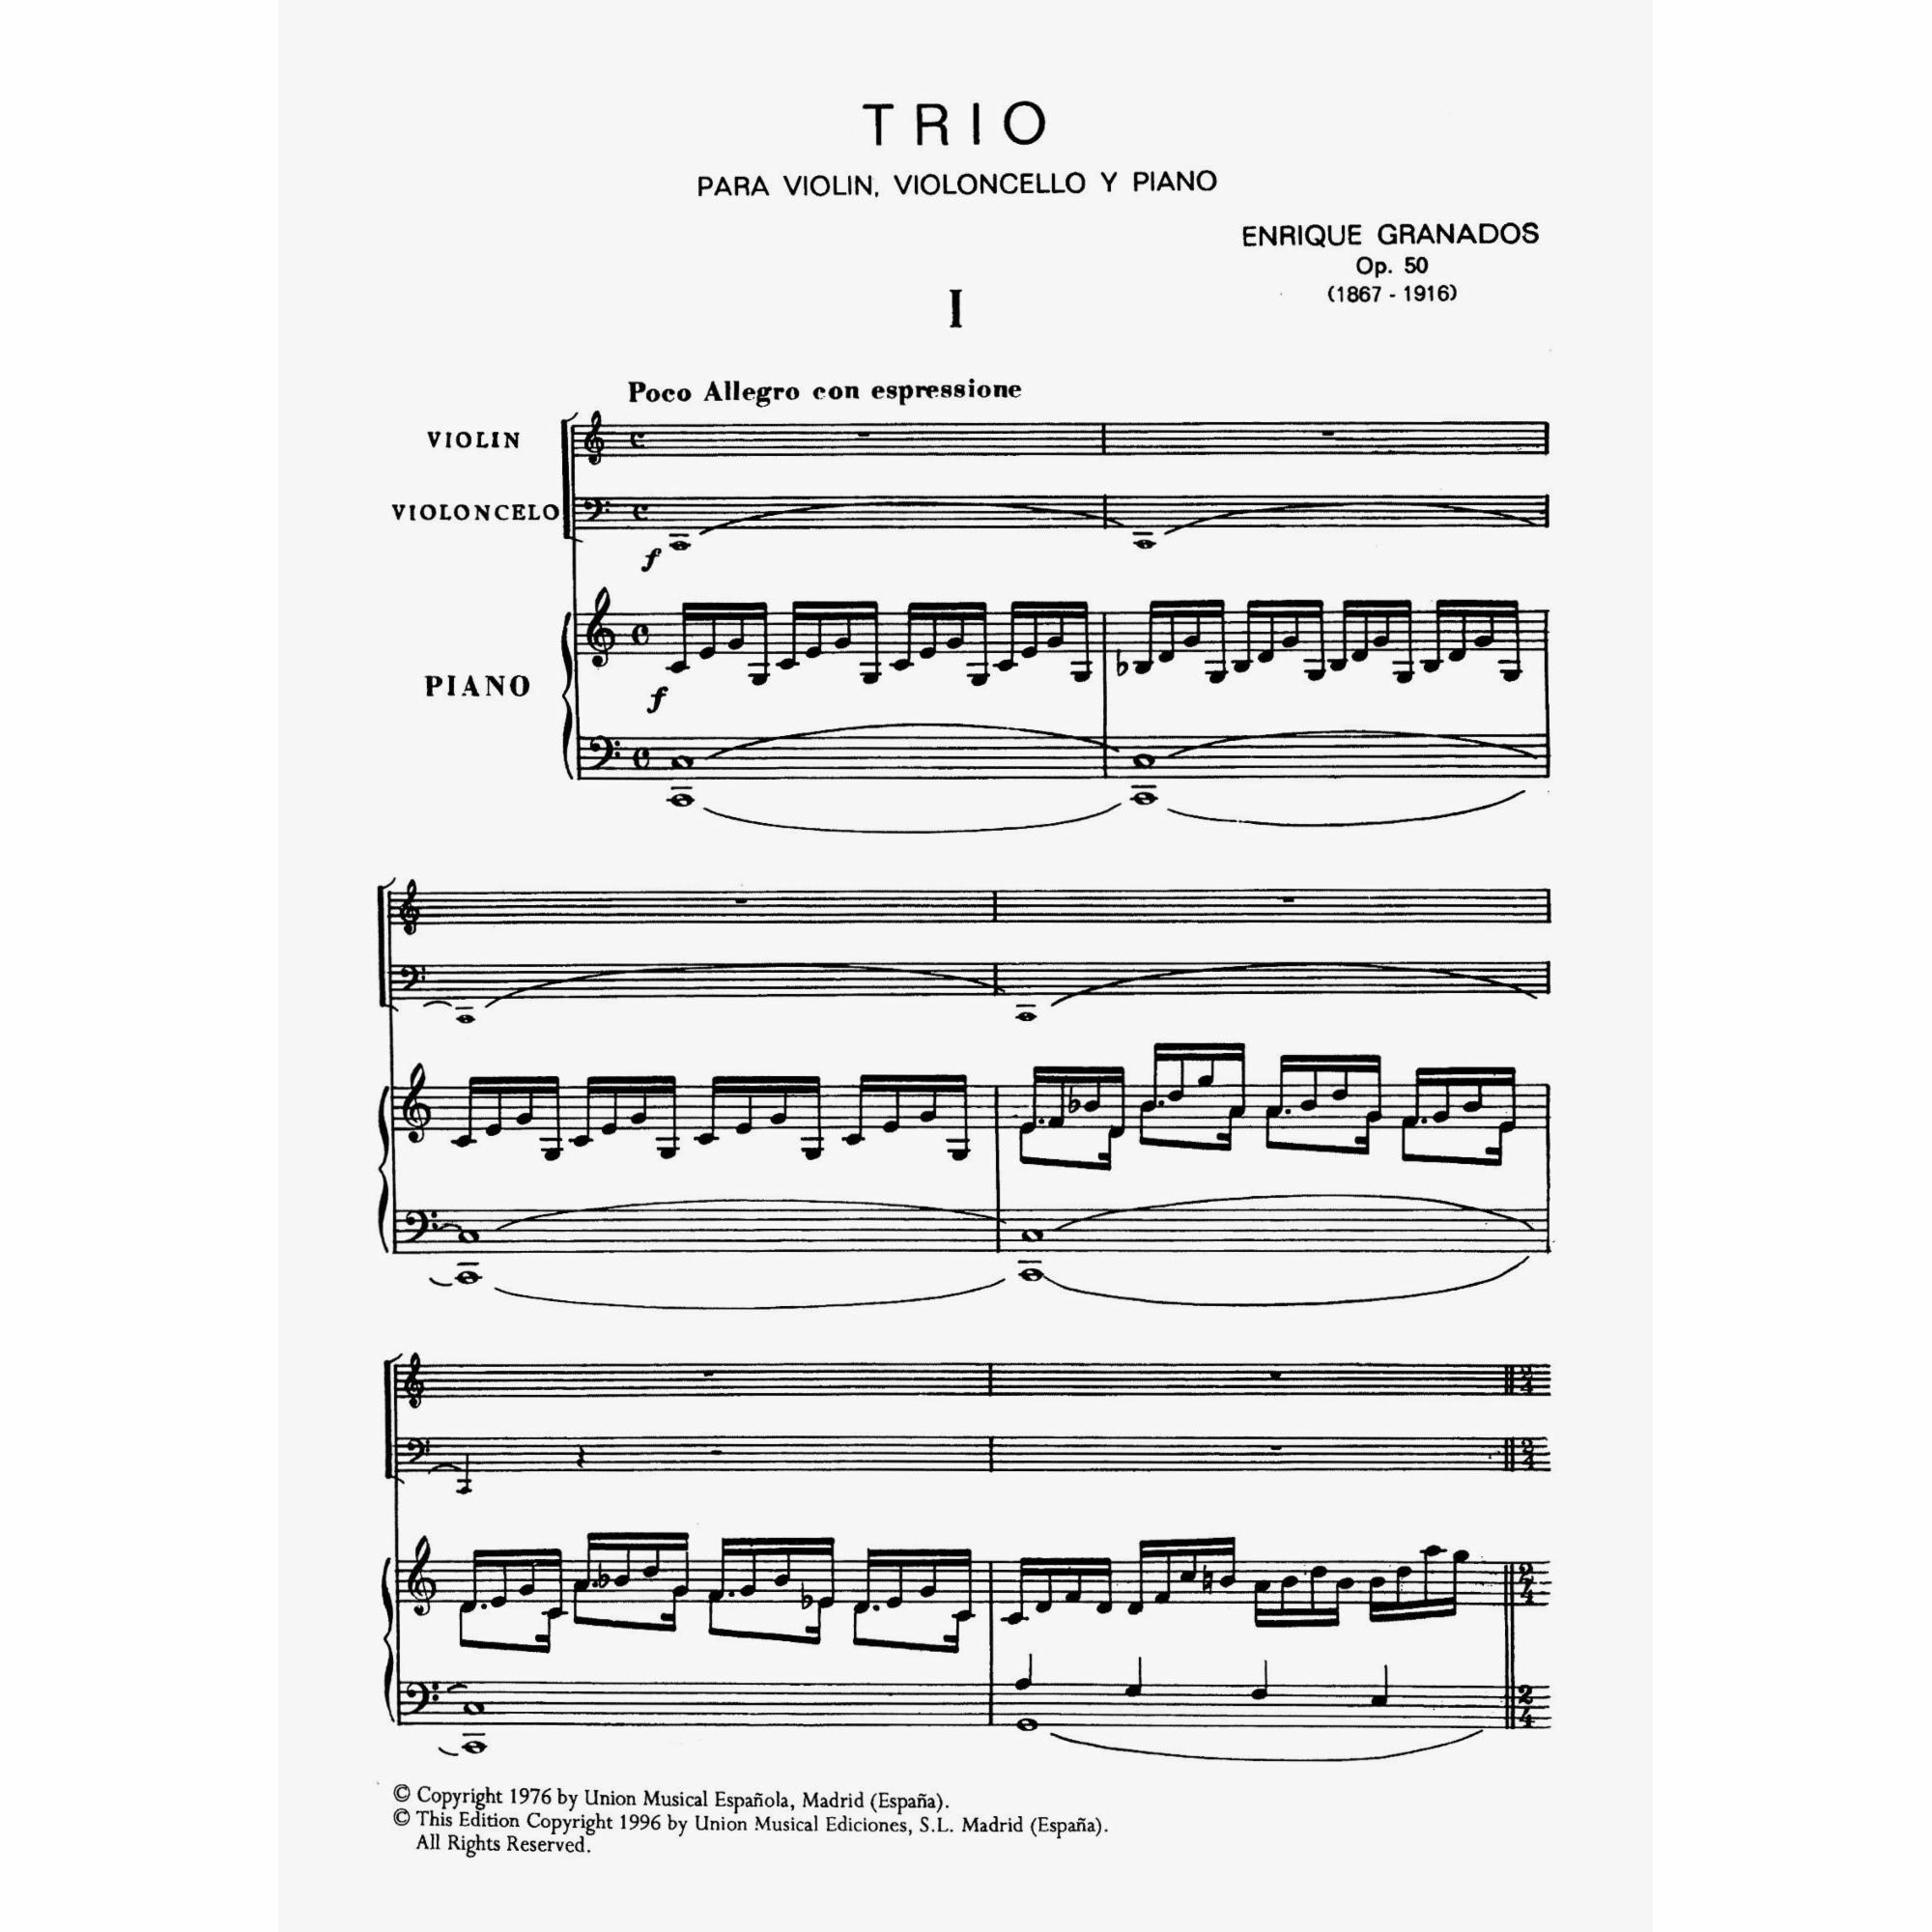 Sample: Piano (Pg. 1)